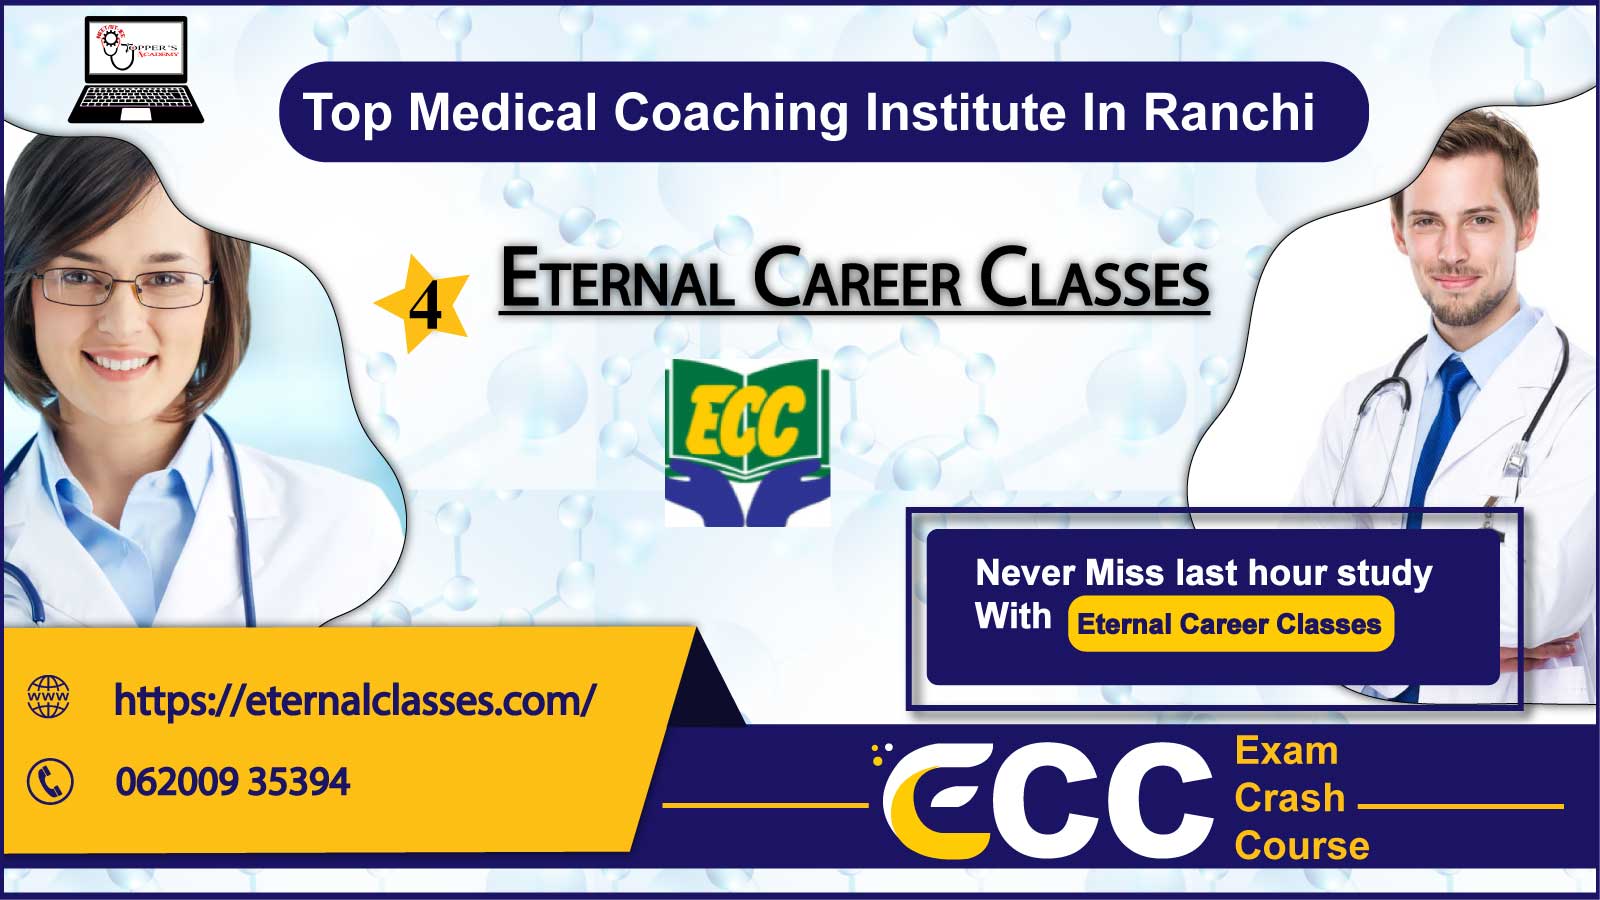 Eternal Career Classes NEET Coaching In Ranchi